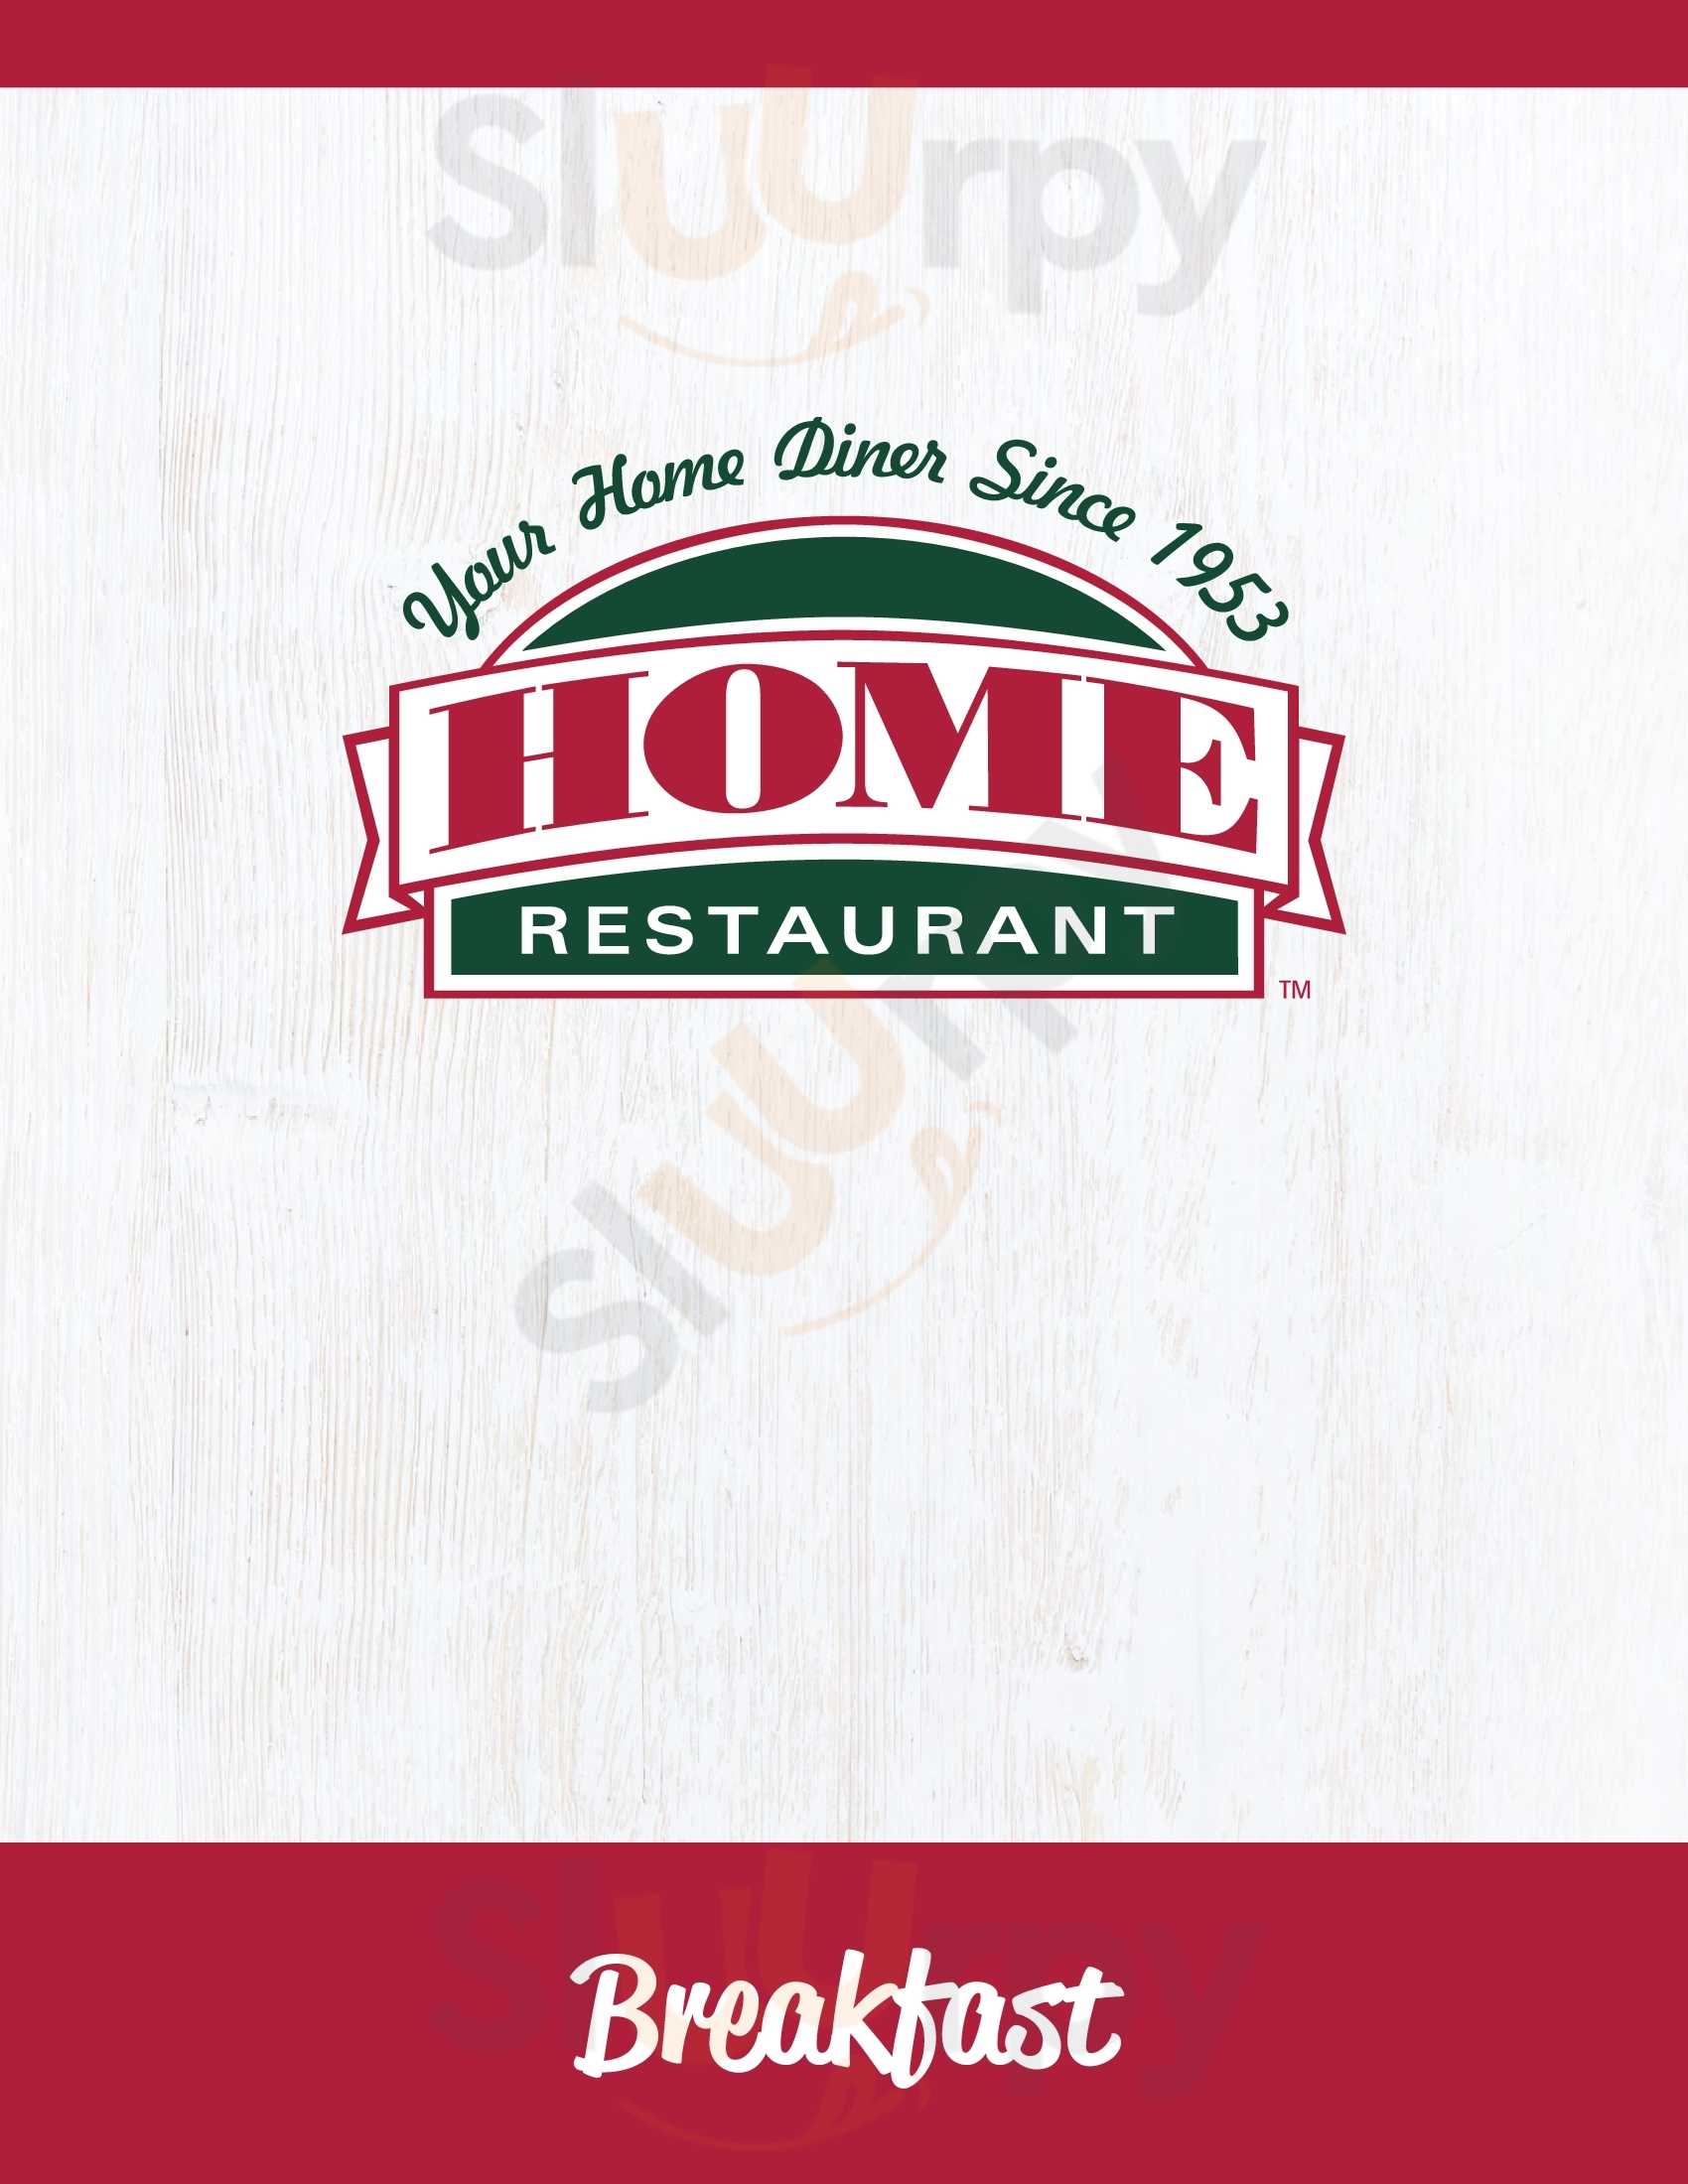 Home Restaurant Maple Ridge Menu - 1